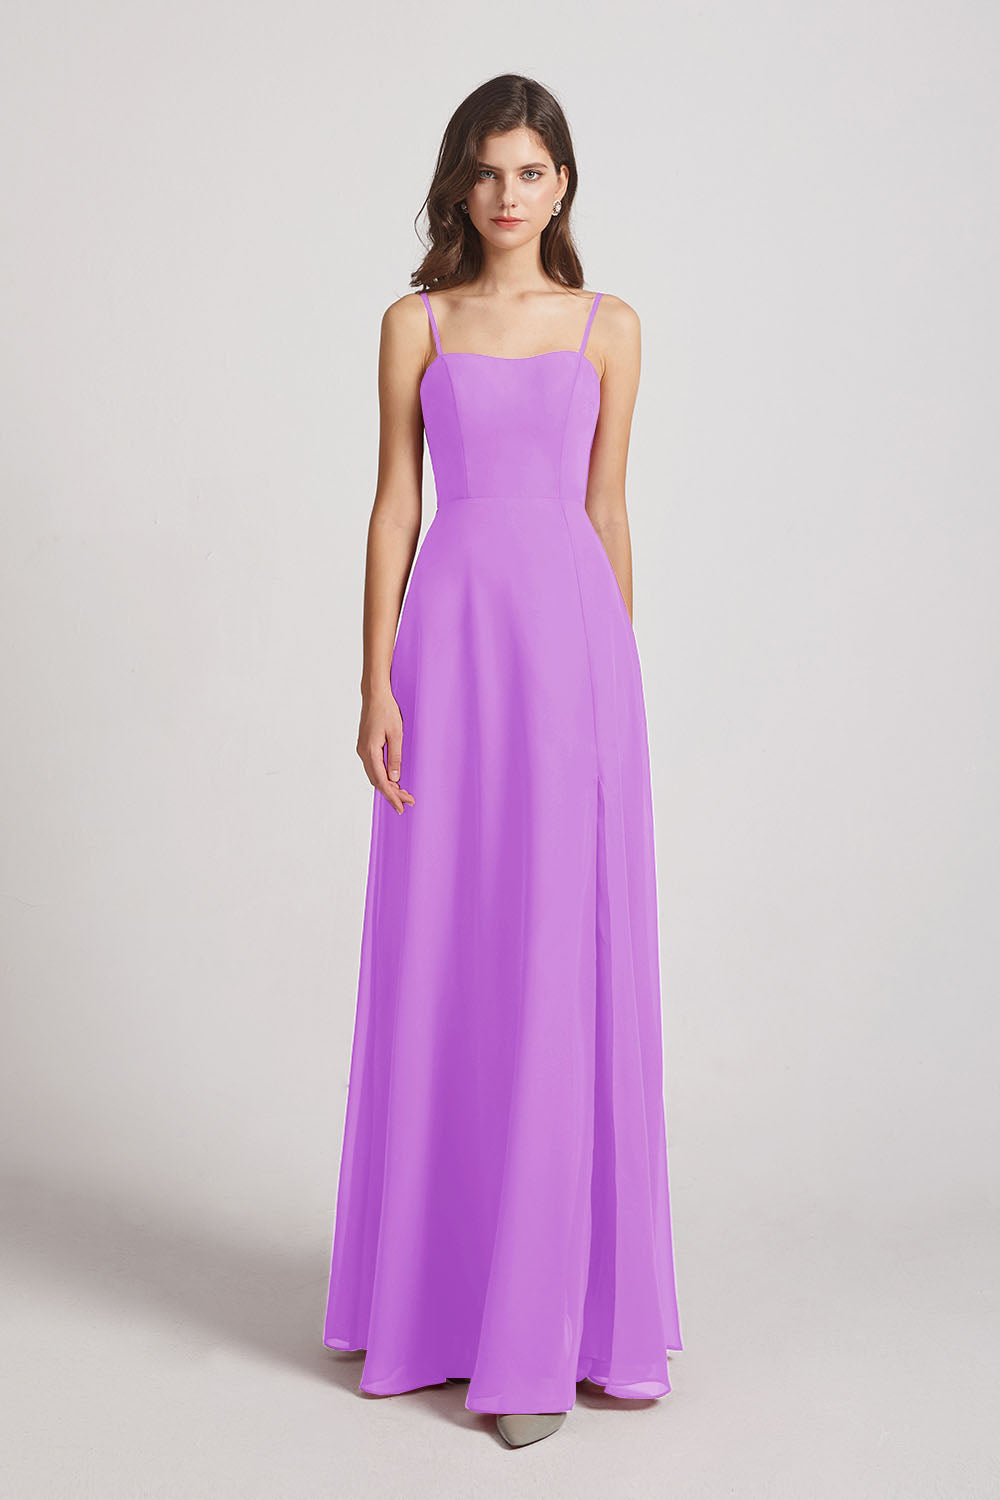 Alfa Bridal Violet Spaghetti Straps Long Chiffon Bridesmaid Dresses with Side Slit (AF0112)